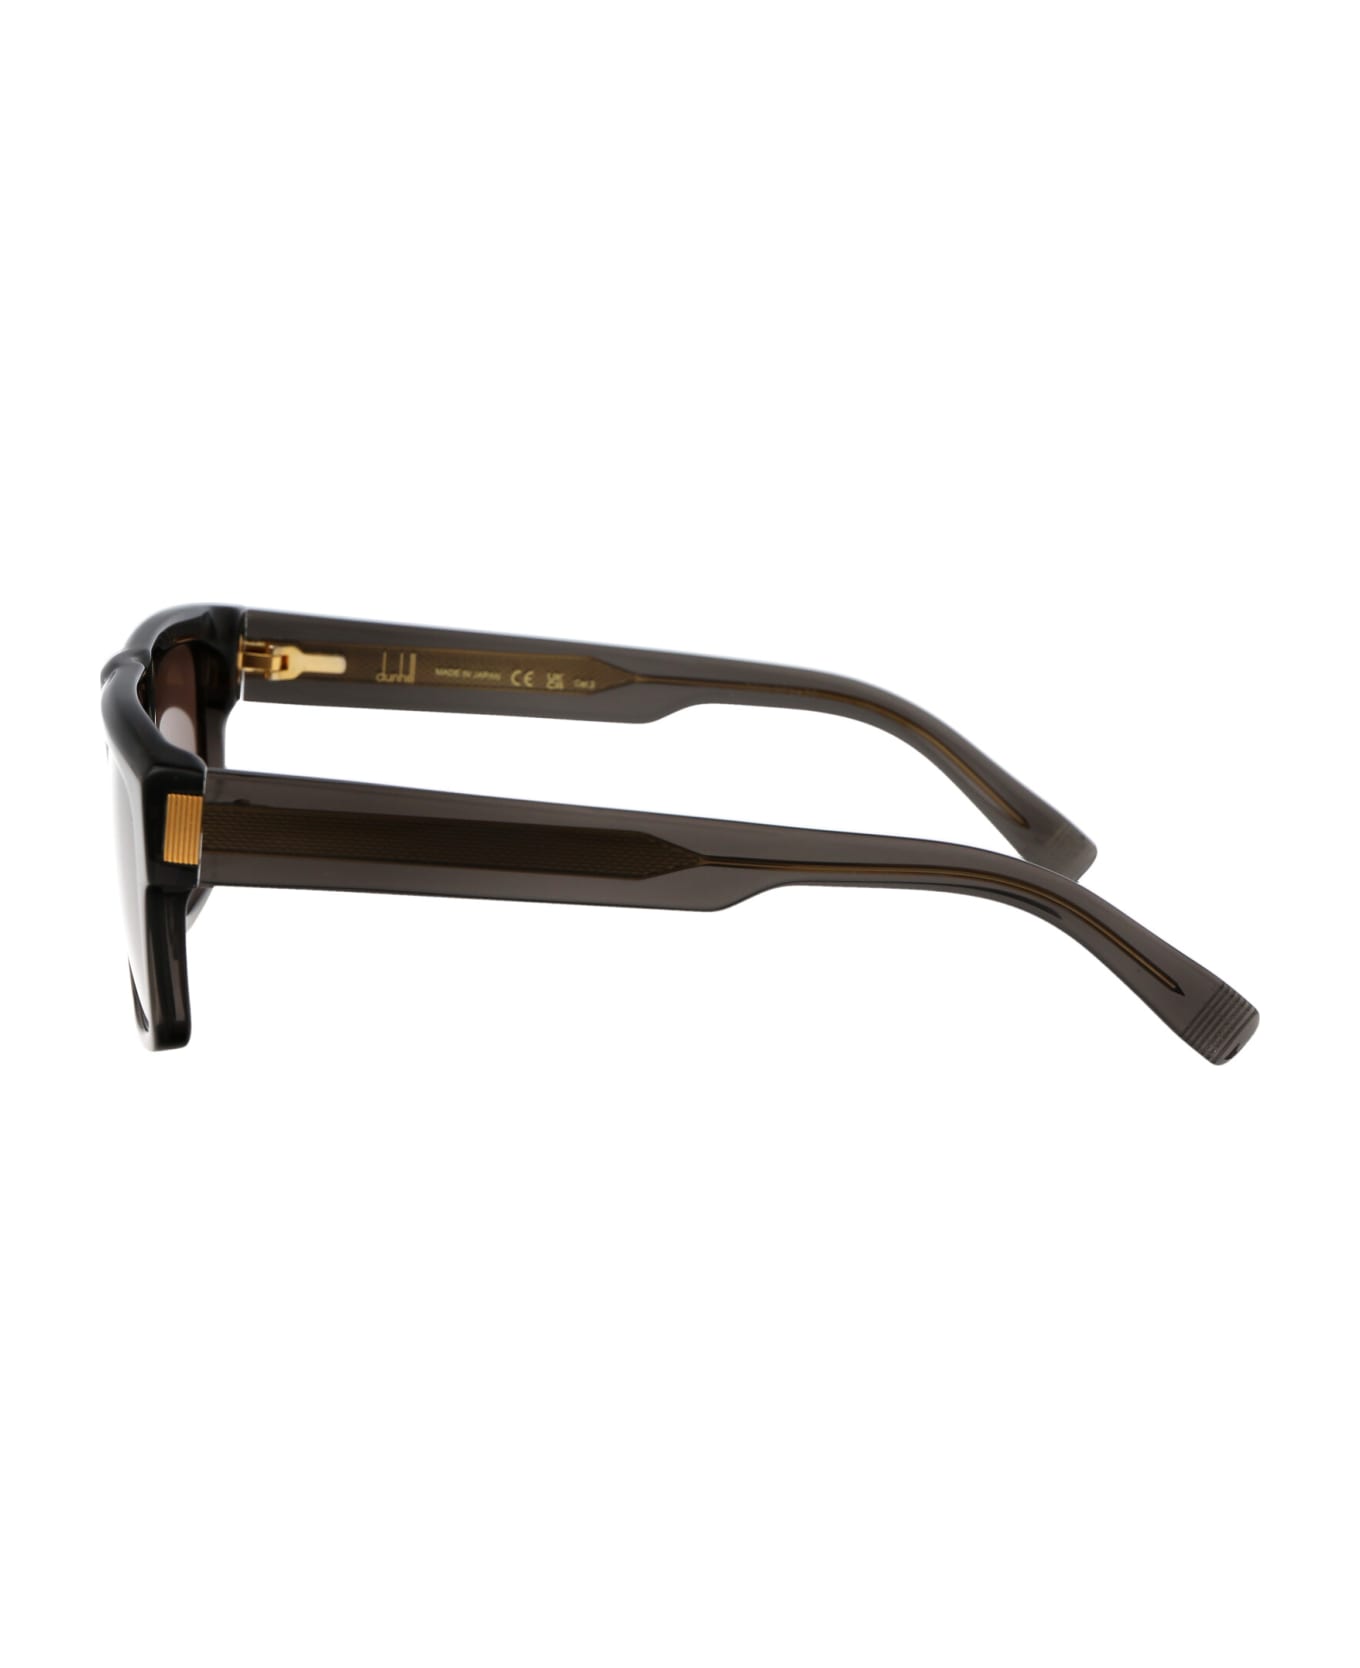 Dunhill Du0055s Sunglasses - 004 GREY GREY BROWN